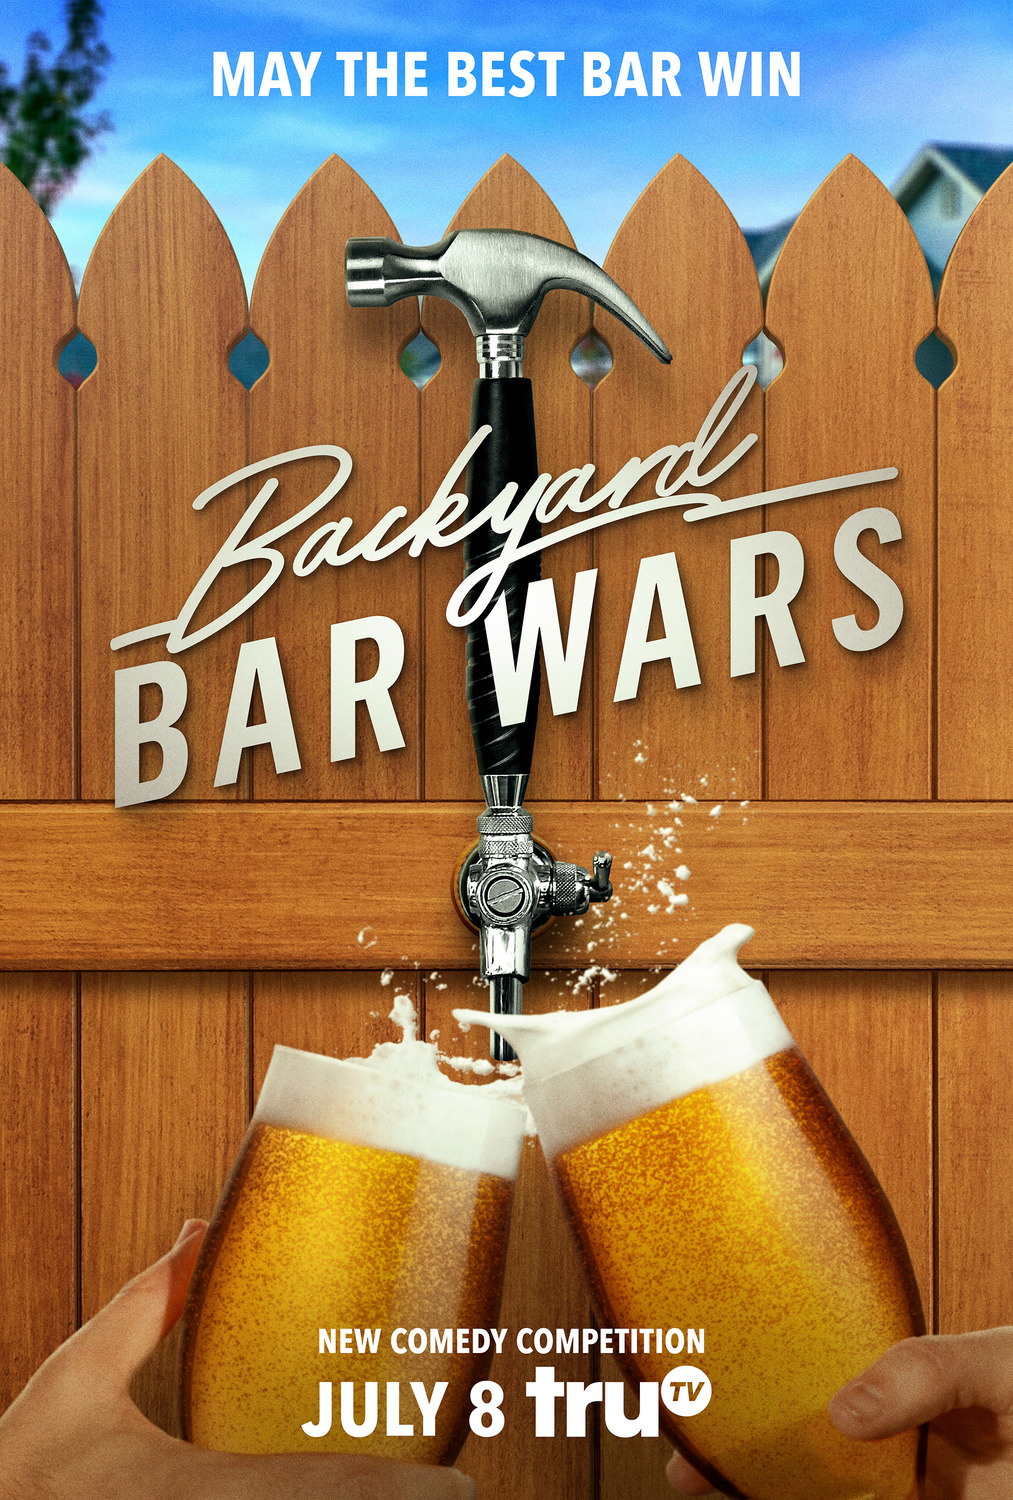 Extra Large TV Poster Image for Backyard Bar Wars 